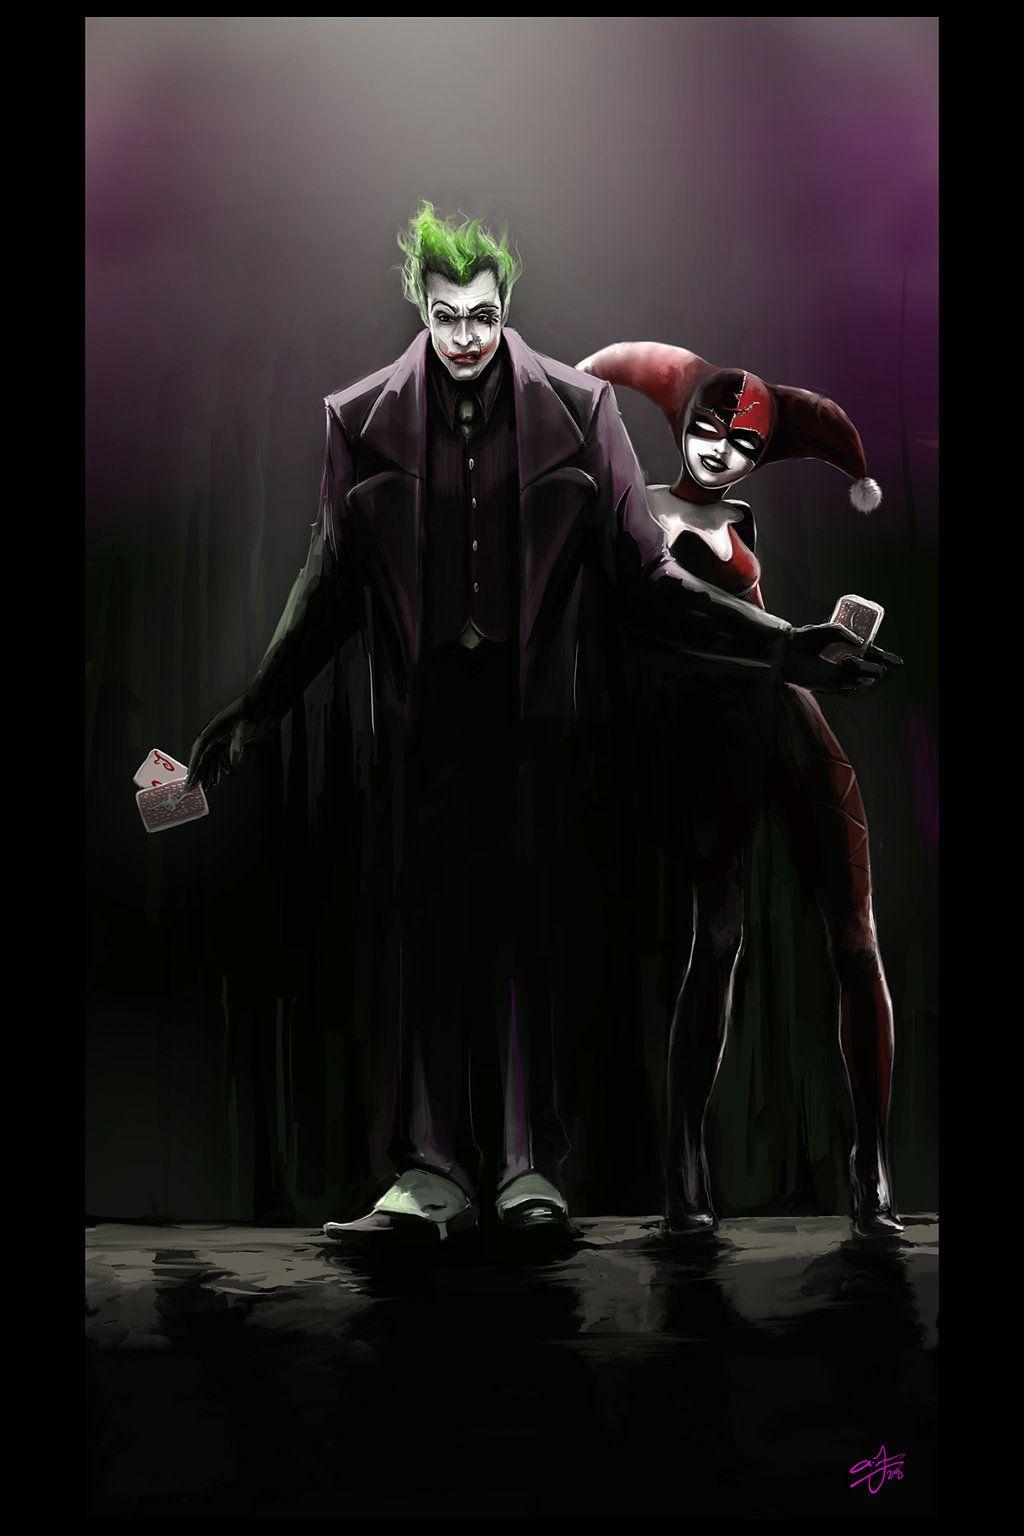 Joker Harley Quinn Wallpaper HD Download Free. file